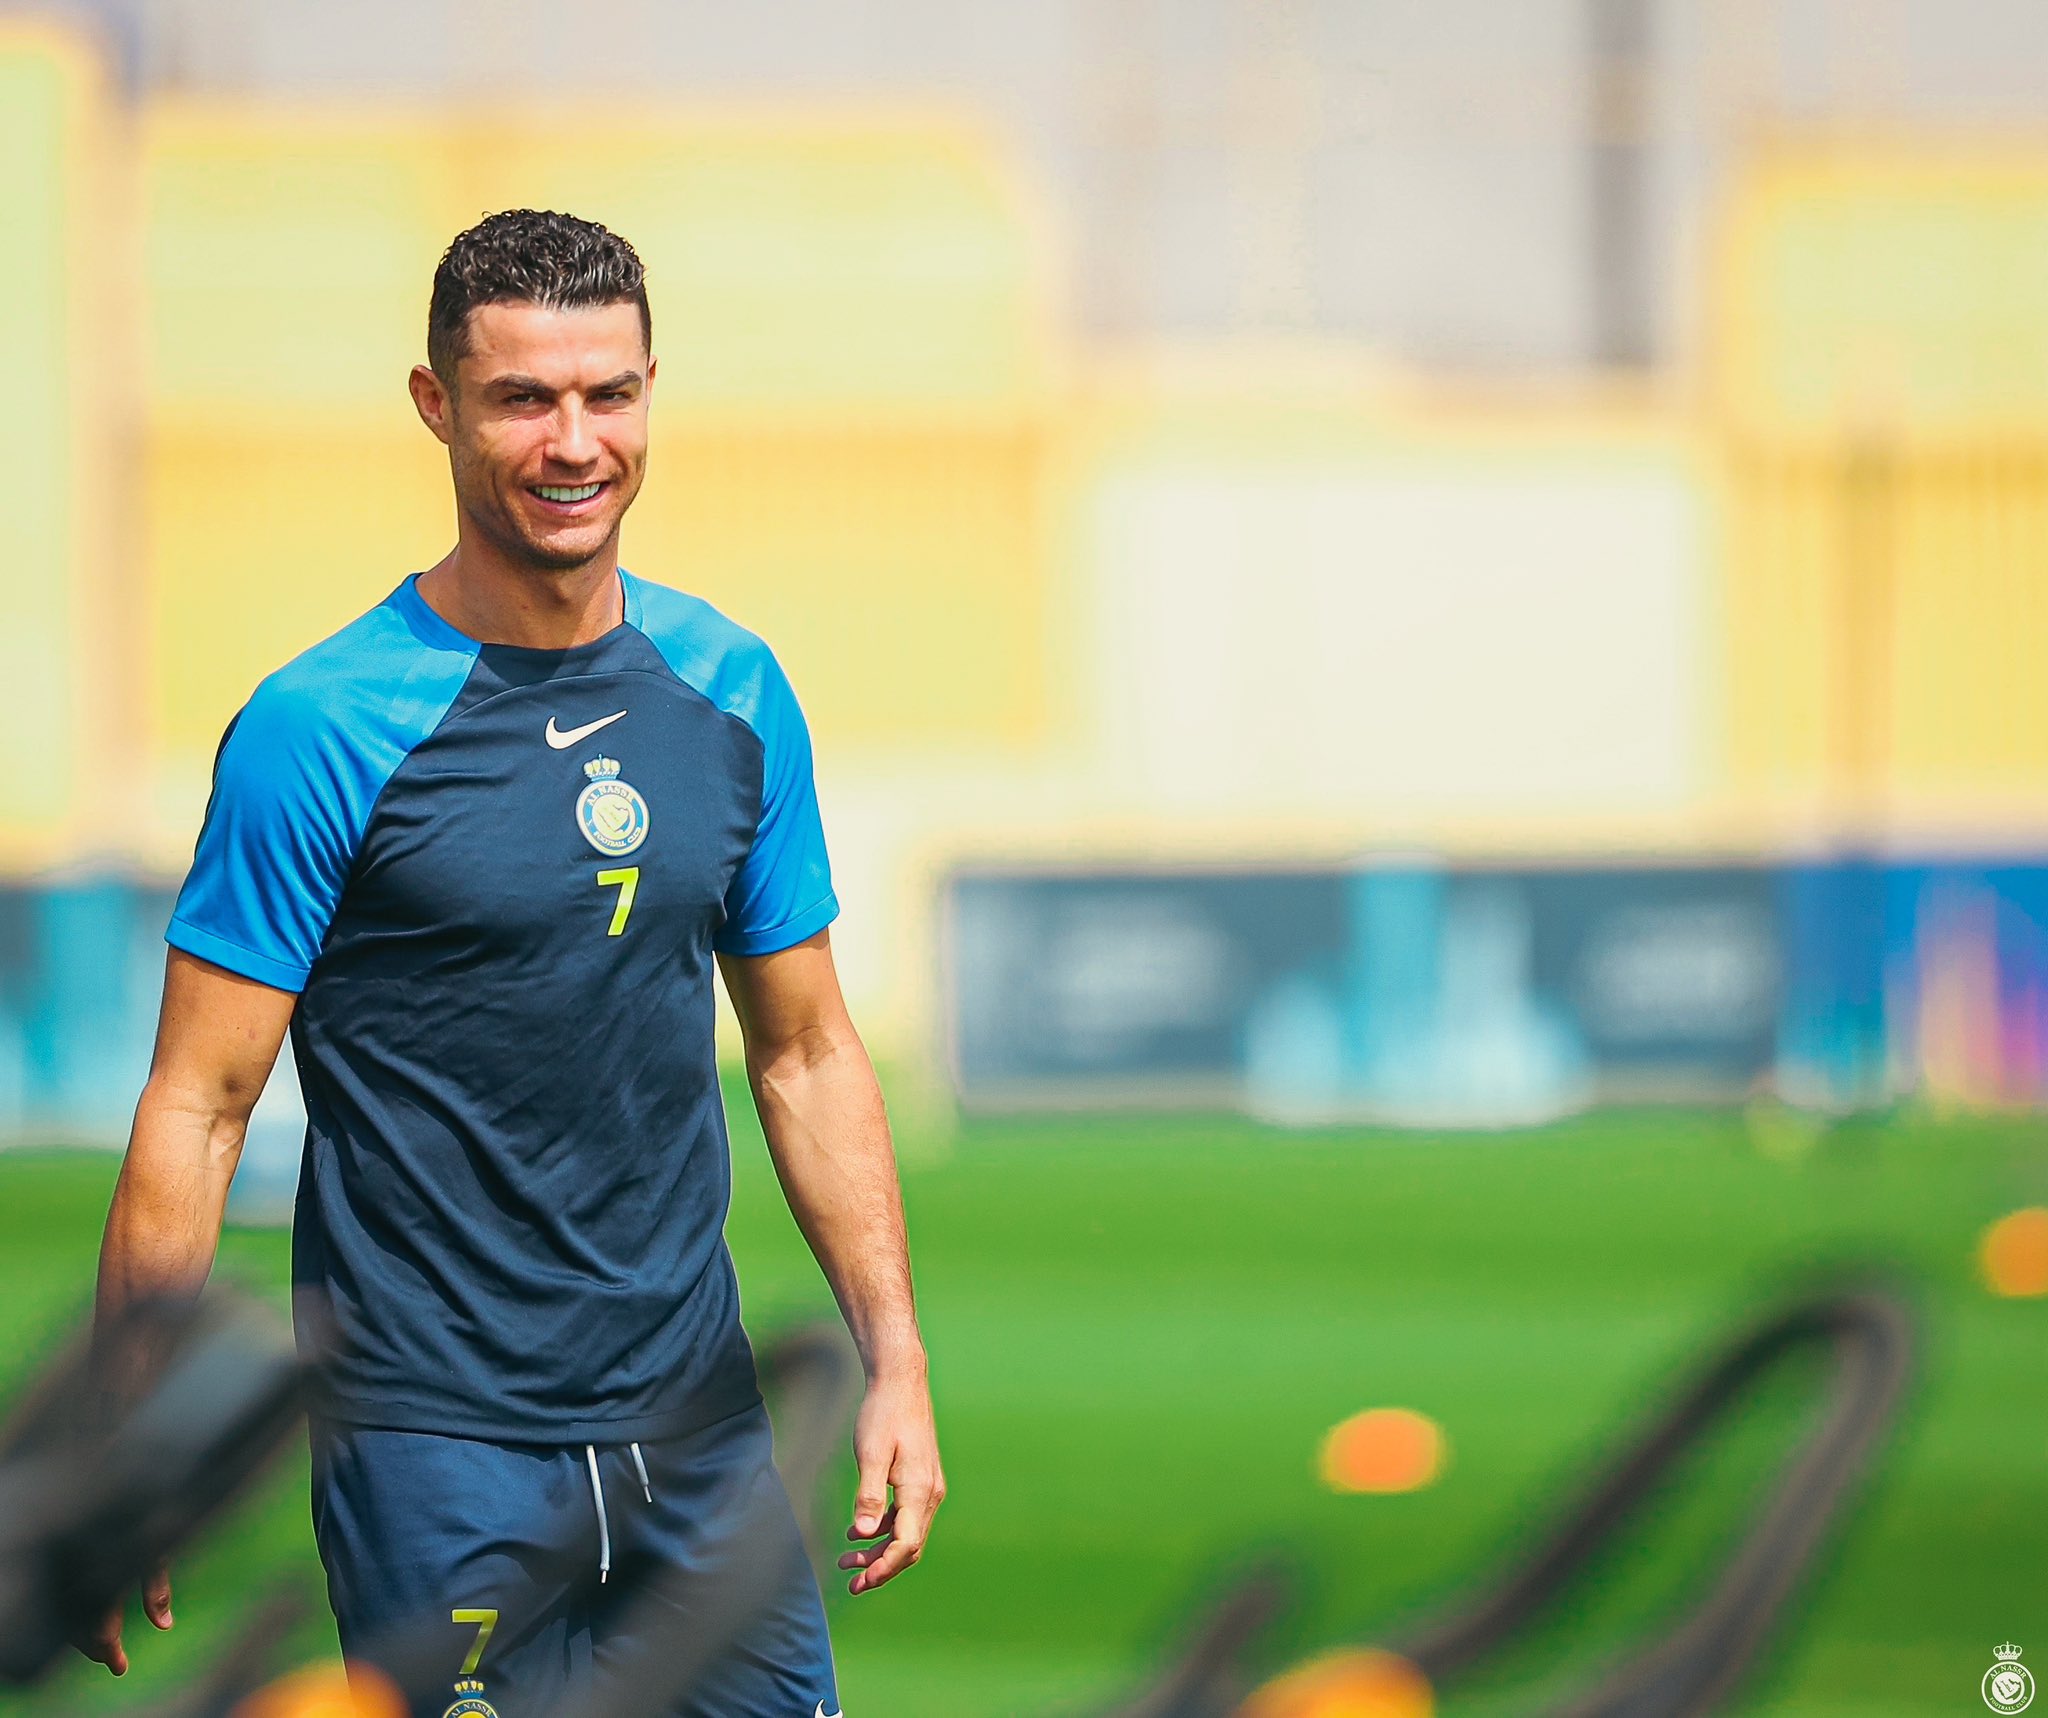  Cristiano Ronaldo's Training Session: The Boss Demonstrates Impressive Skills 3